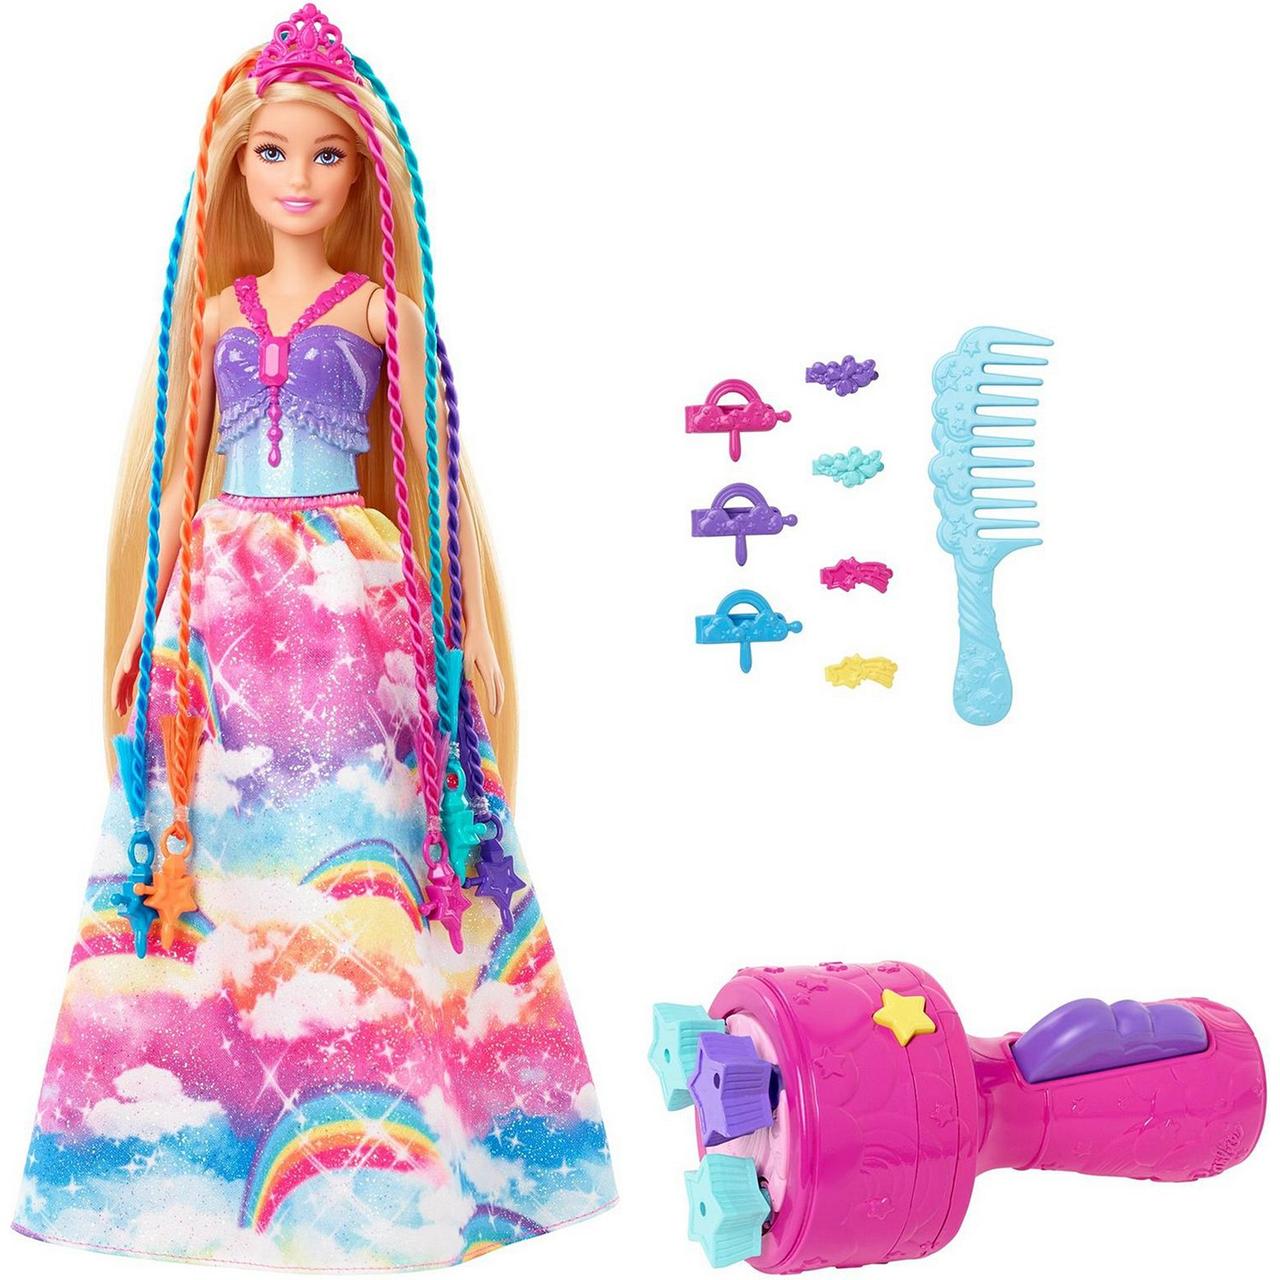 Barbie "Дримтопия" Кукла Барби Прицесса с аксессуарами для волос